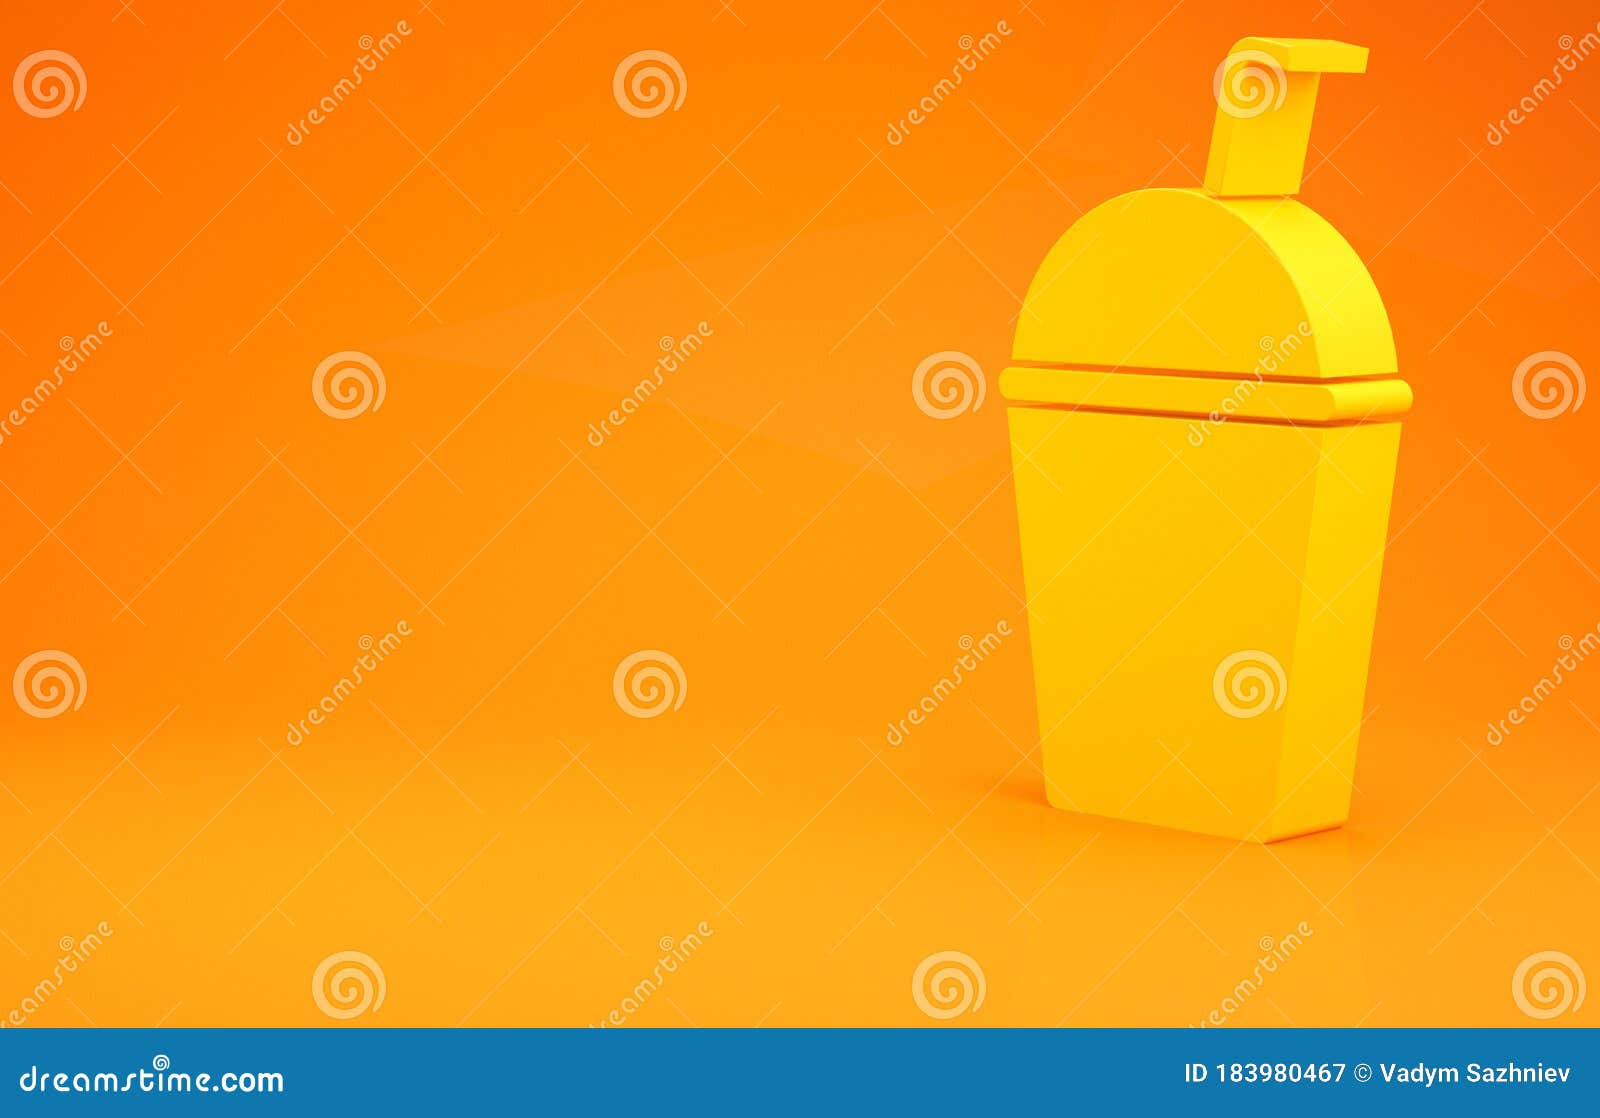 Yellow Milkshake Icon Isolated on Orange Background. Plastic Cup with ...